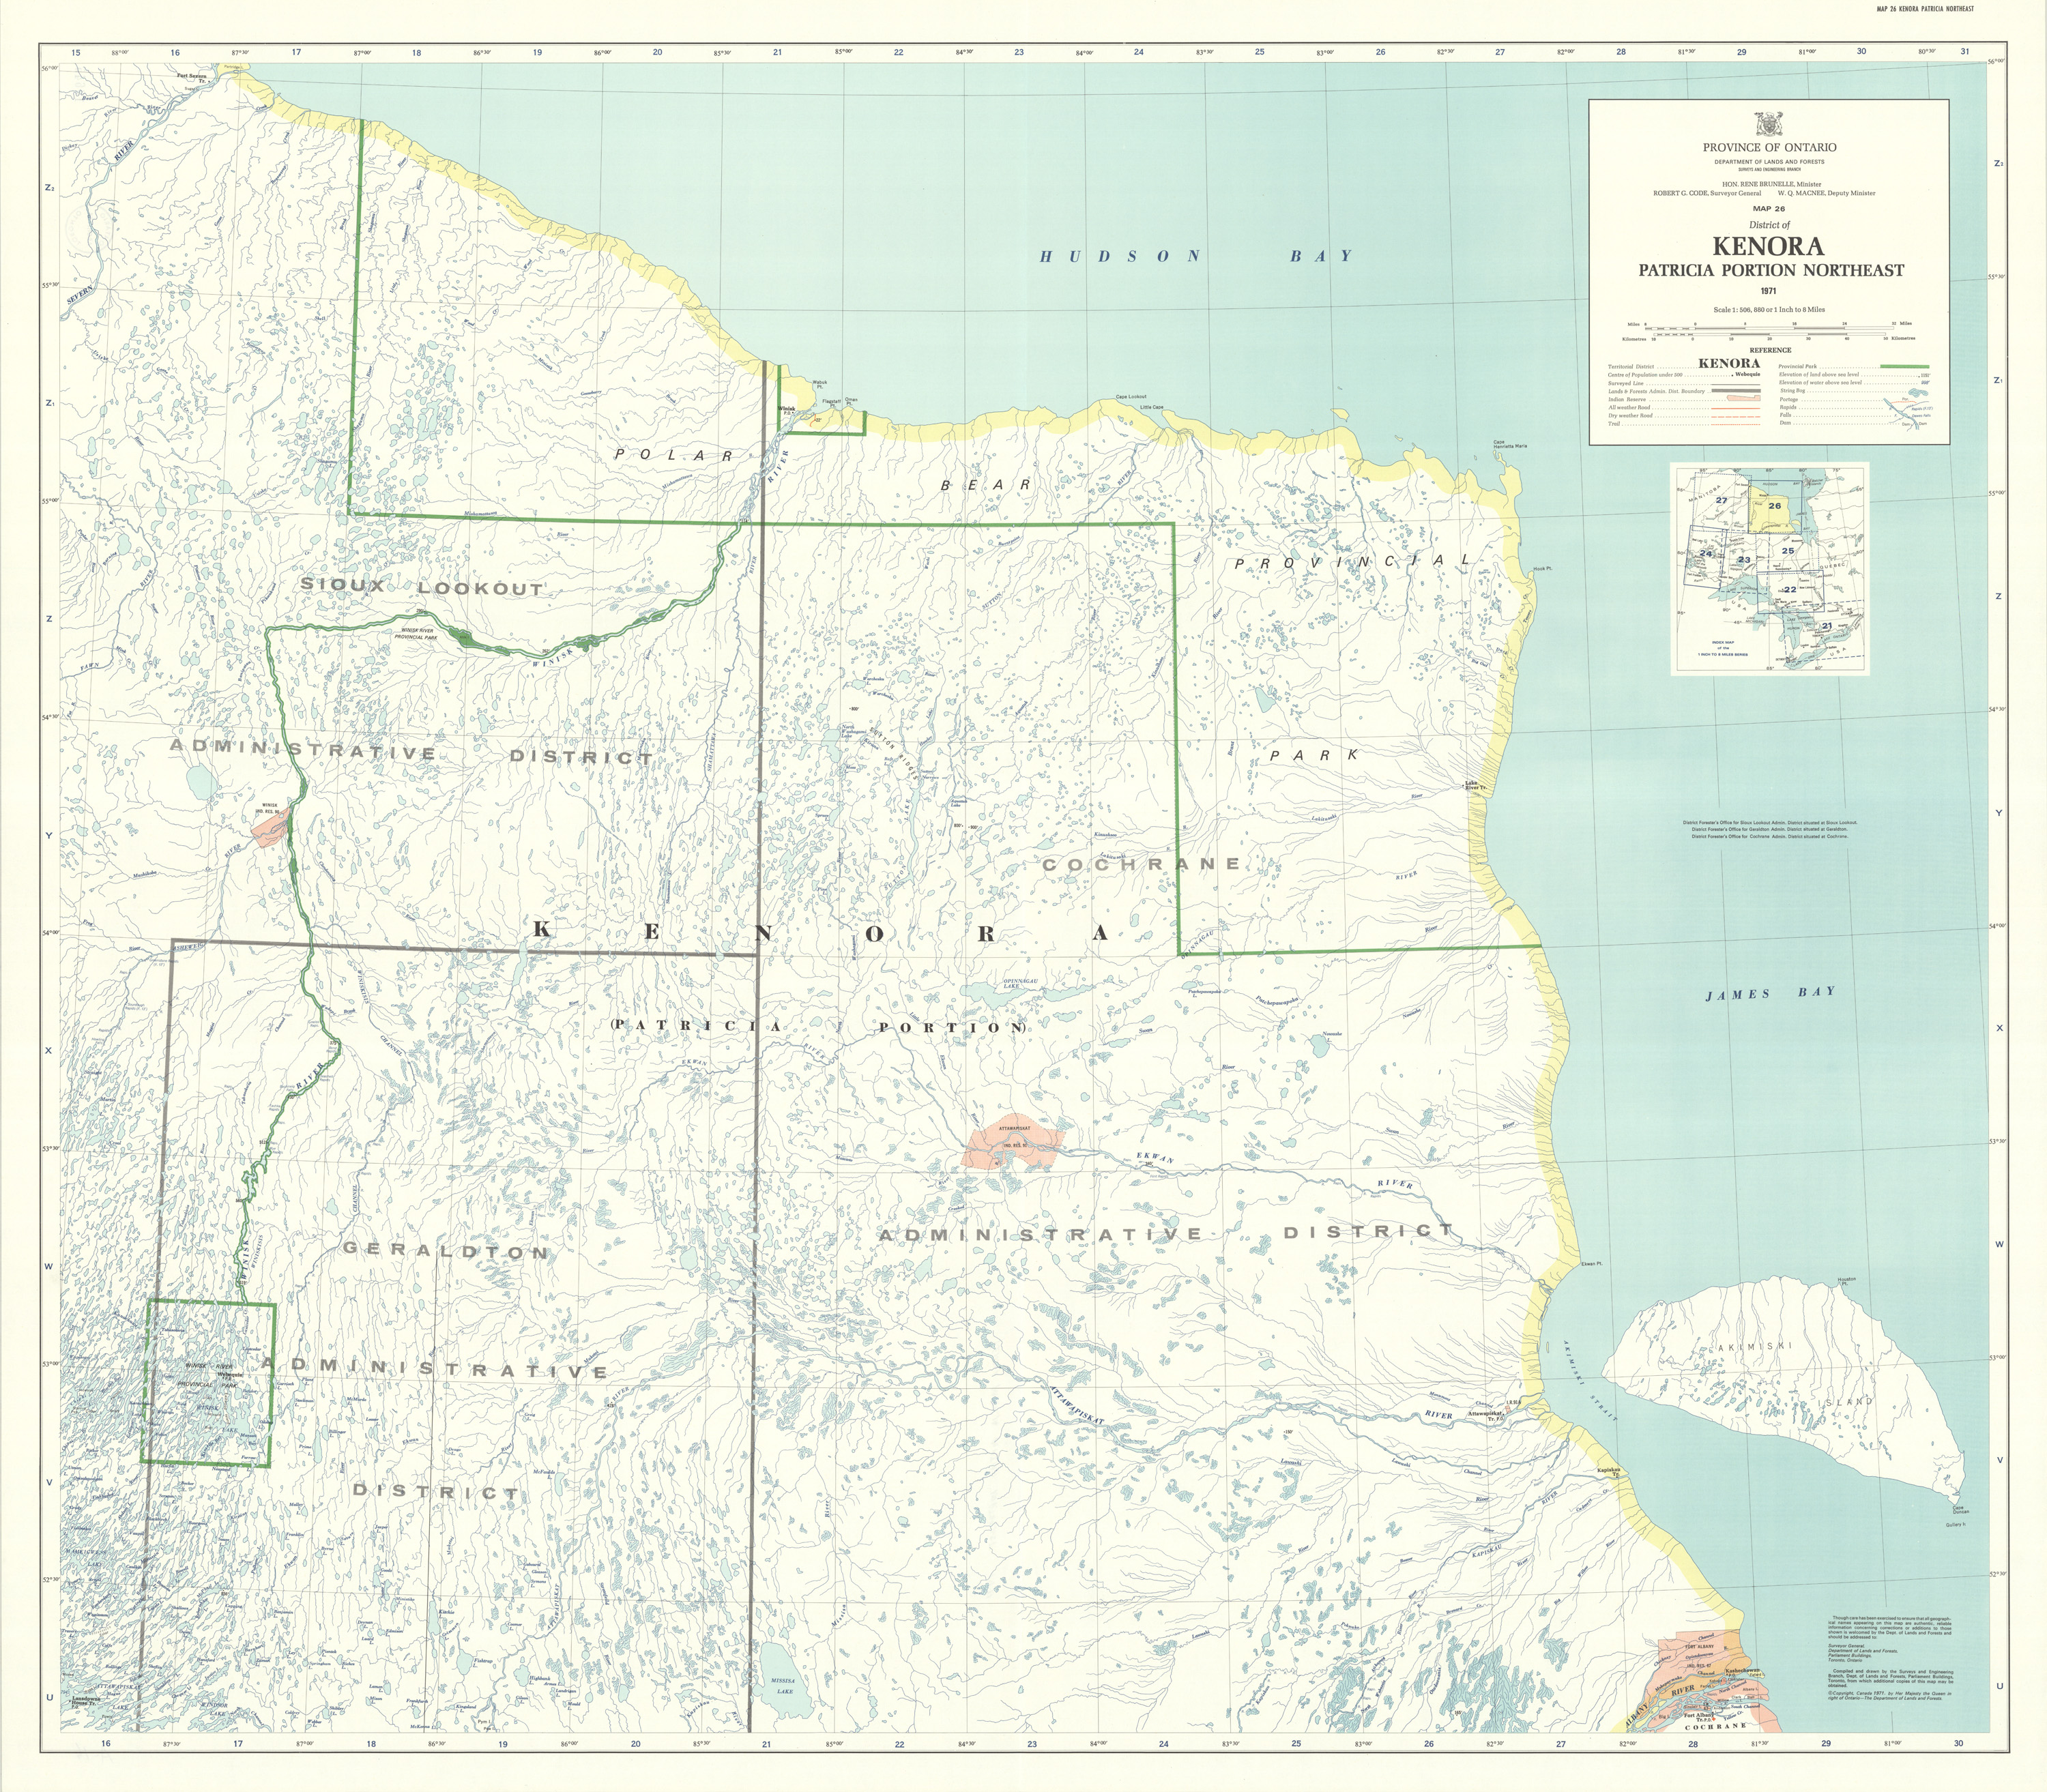 District of Kenora Patricia Portion Northwest 1971